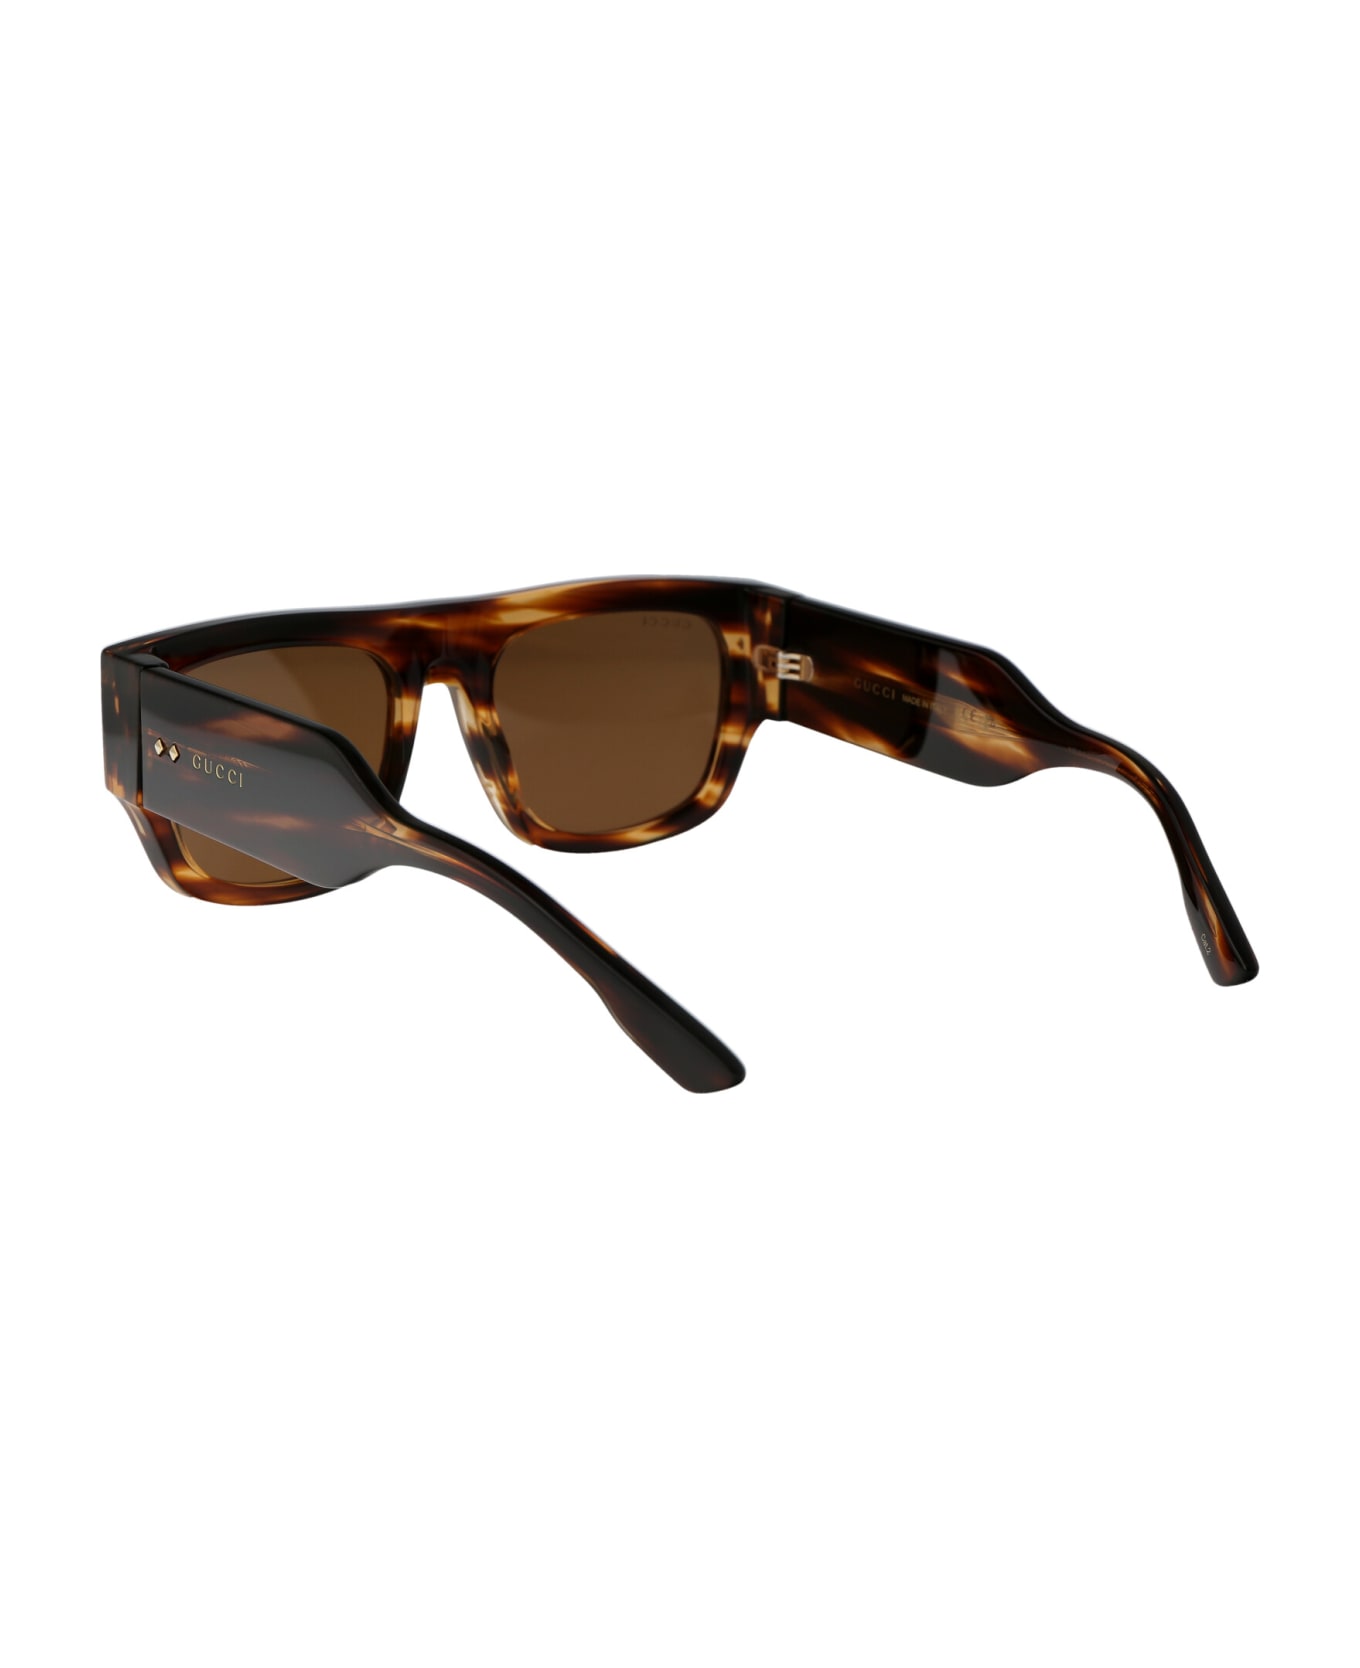 Gucci Eyewear Gg1262s Sunglasses - 004 HAVANA HAVANA BROWN